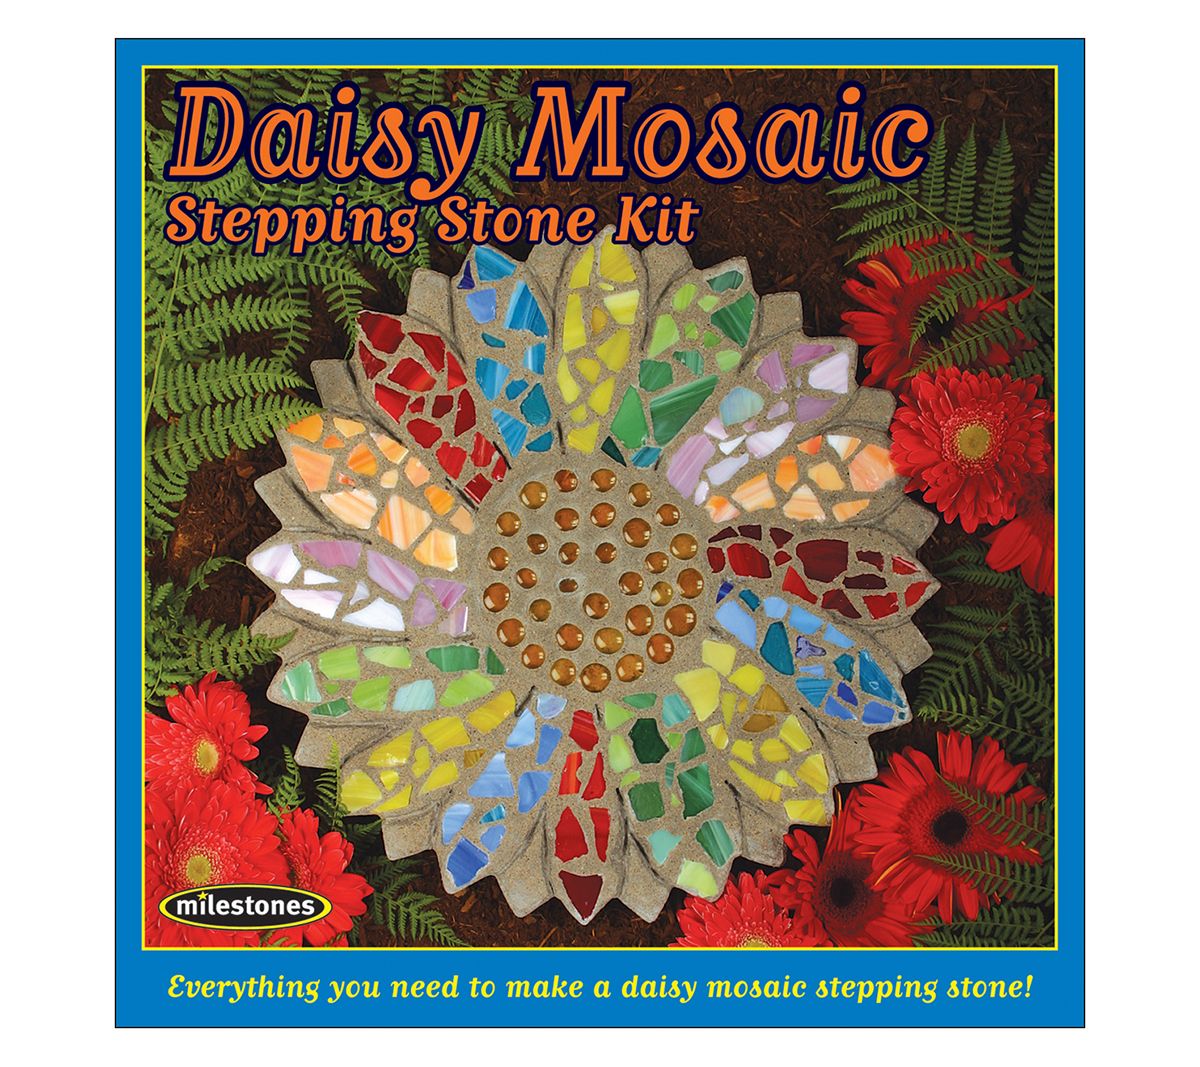 Mosaic Flower Stepping Stone Kit